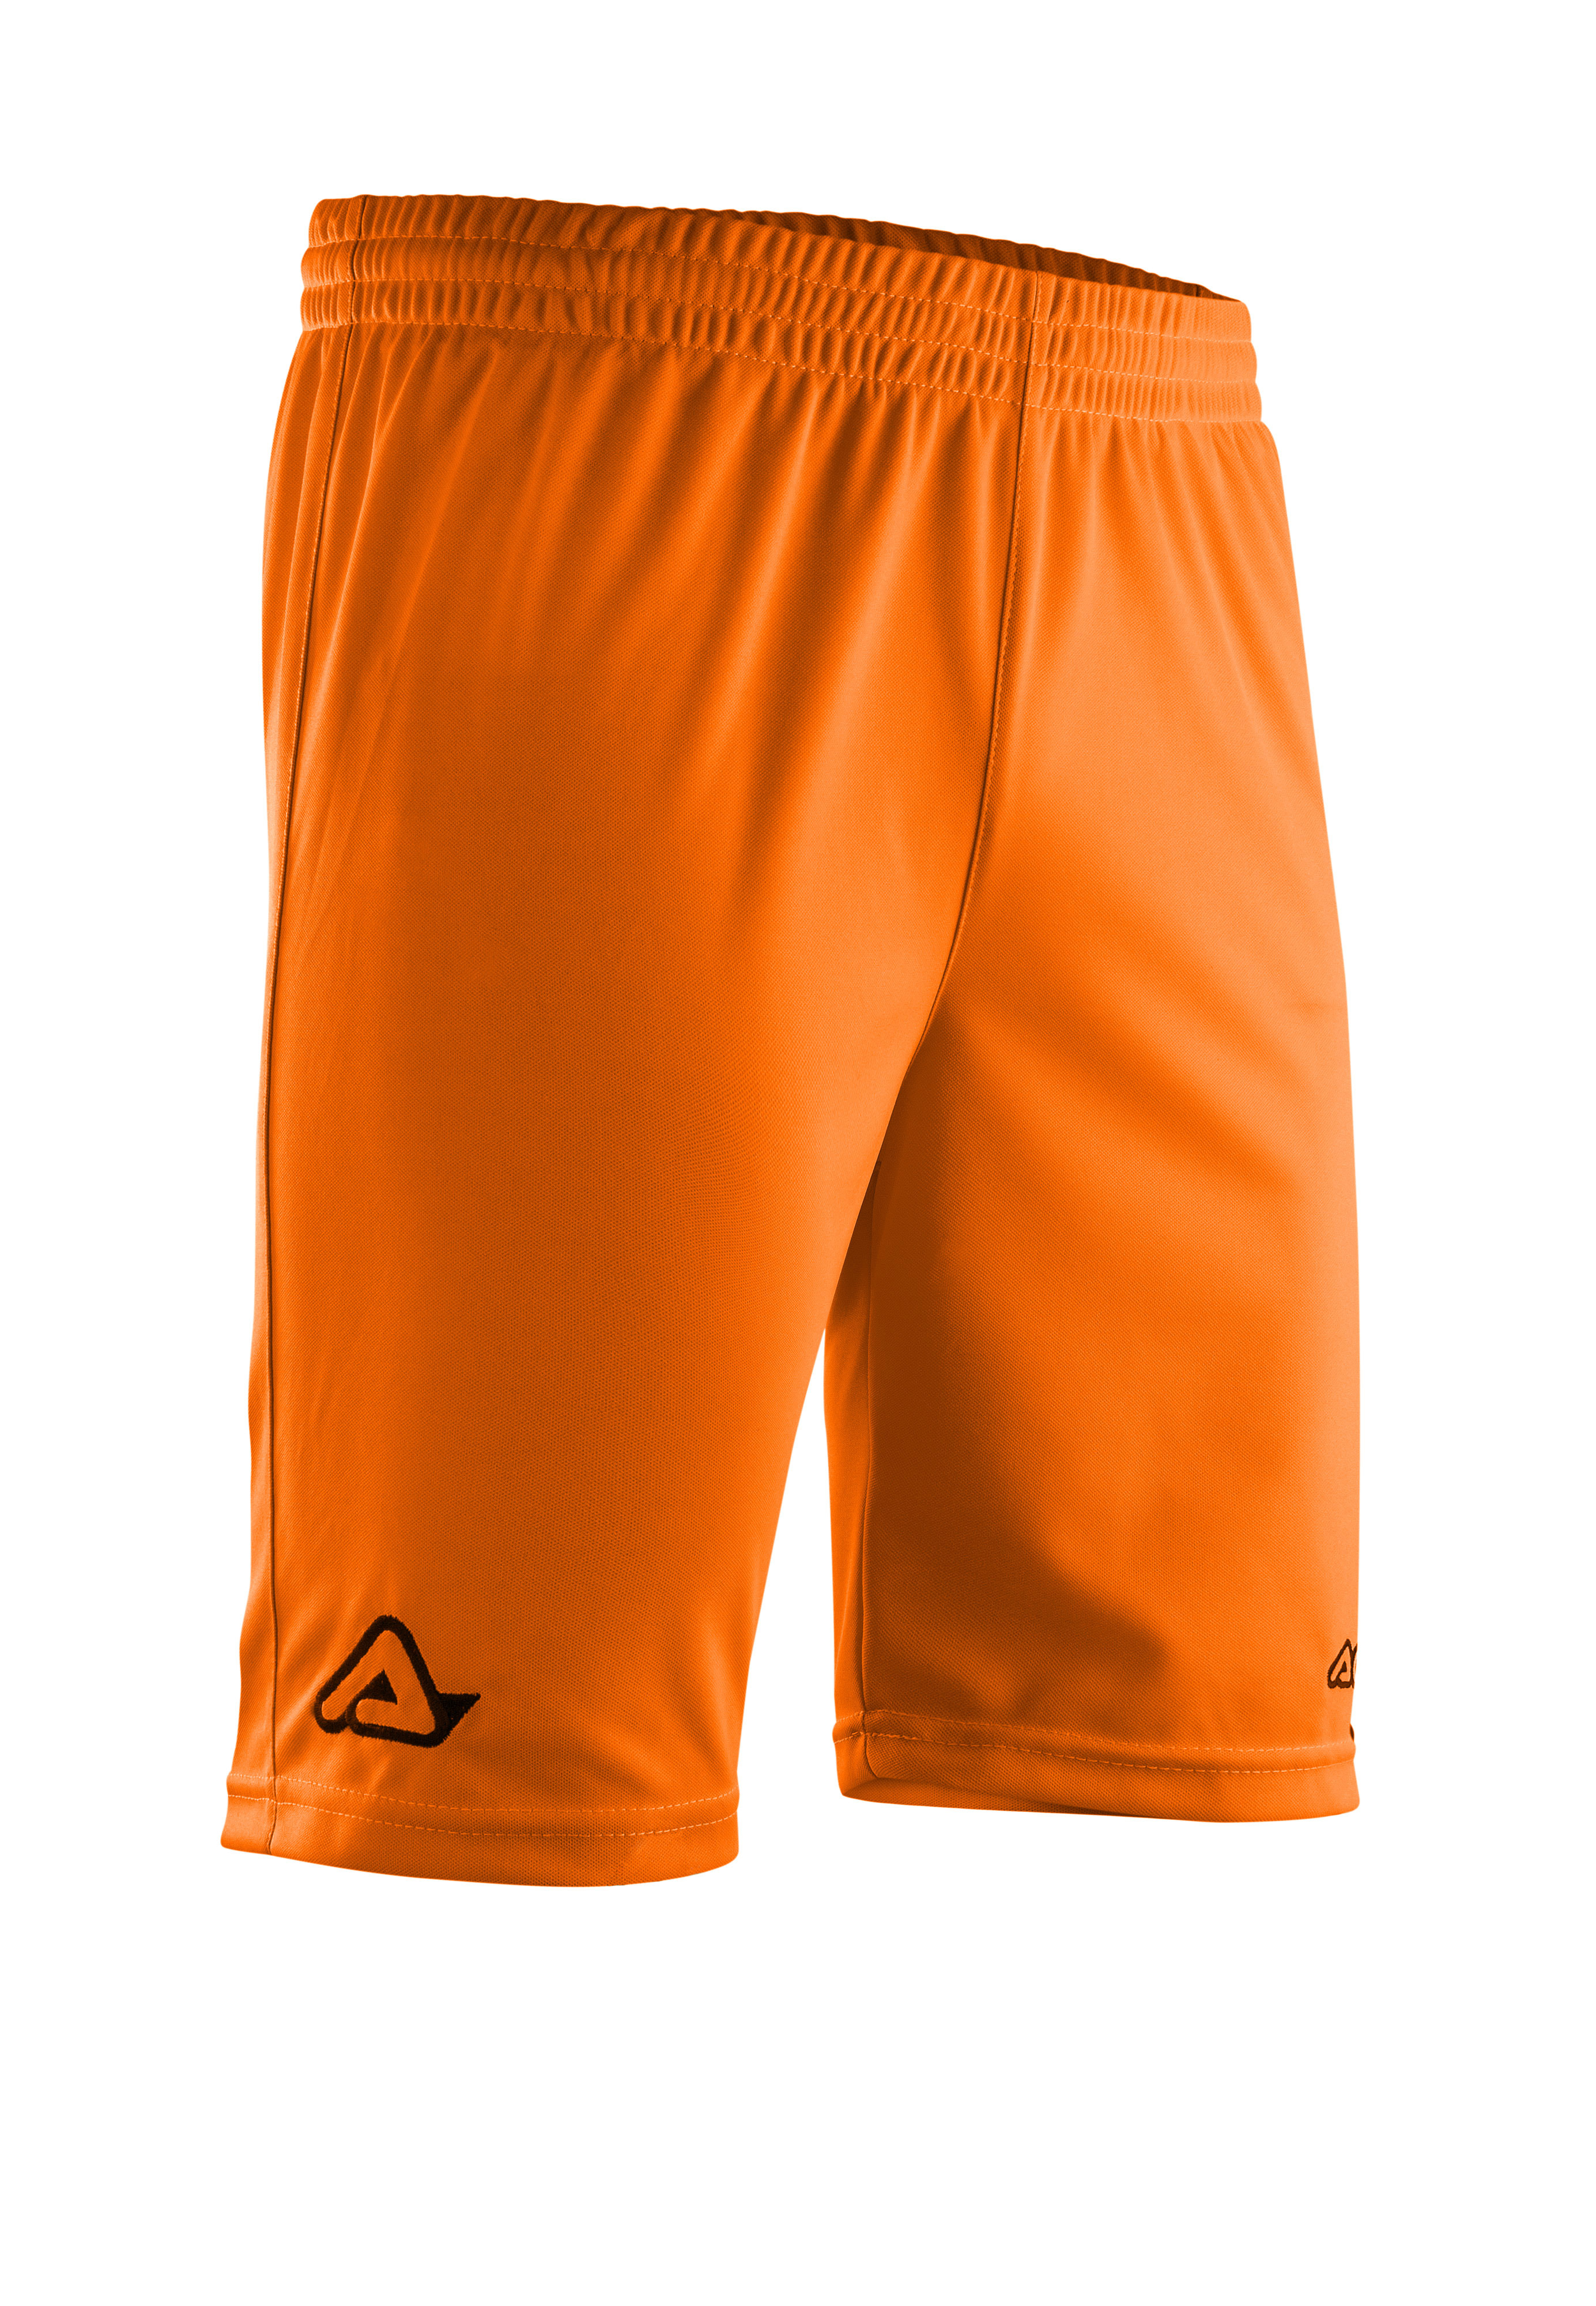 ATLANTIS Shorts | Acerbis sport